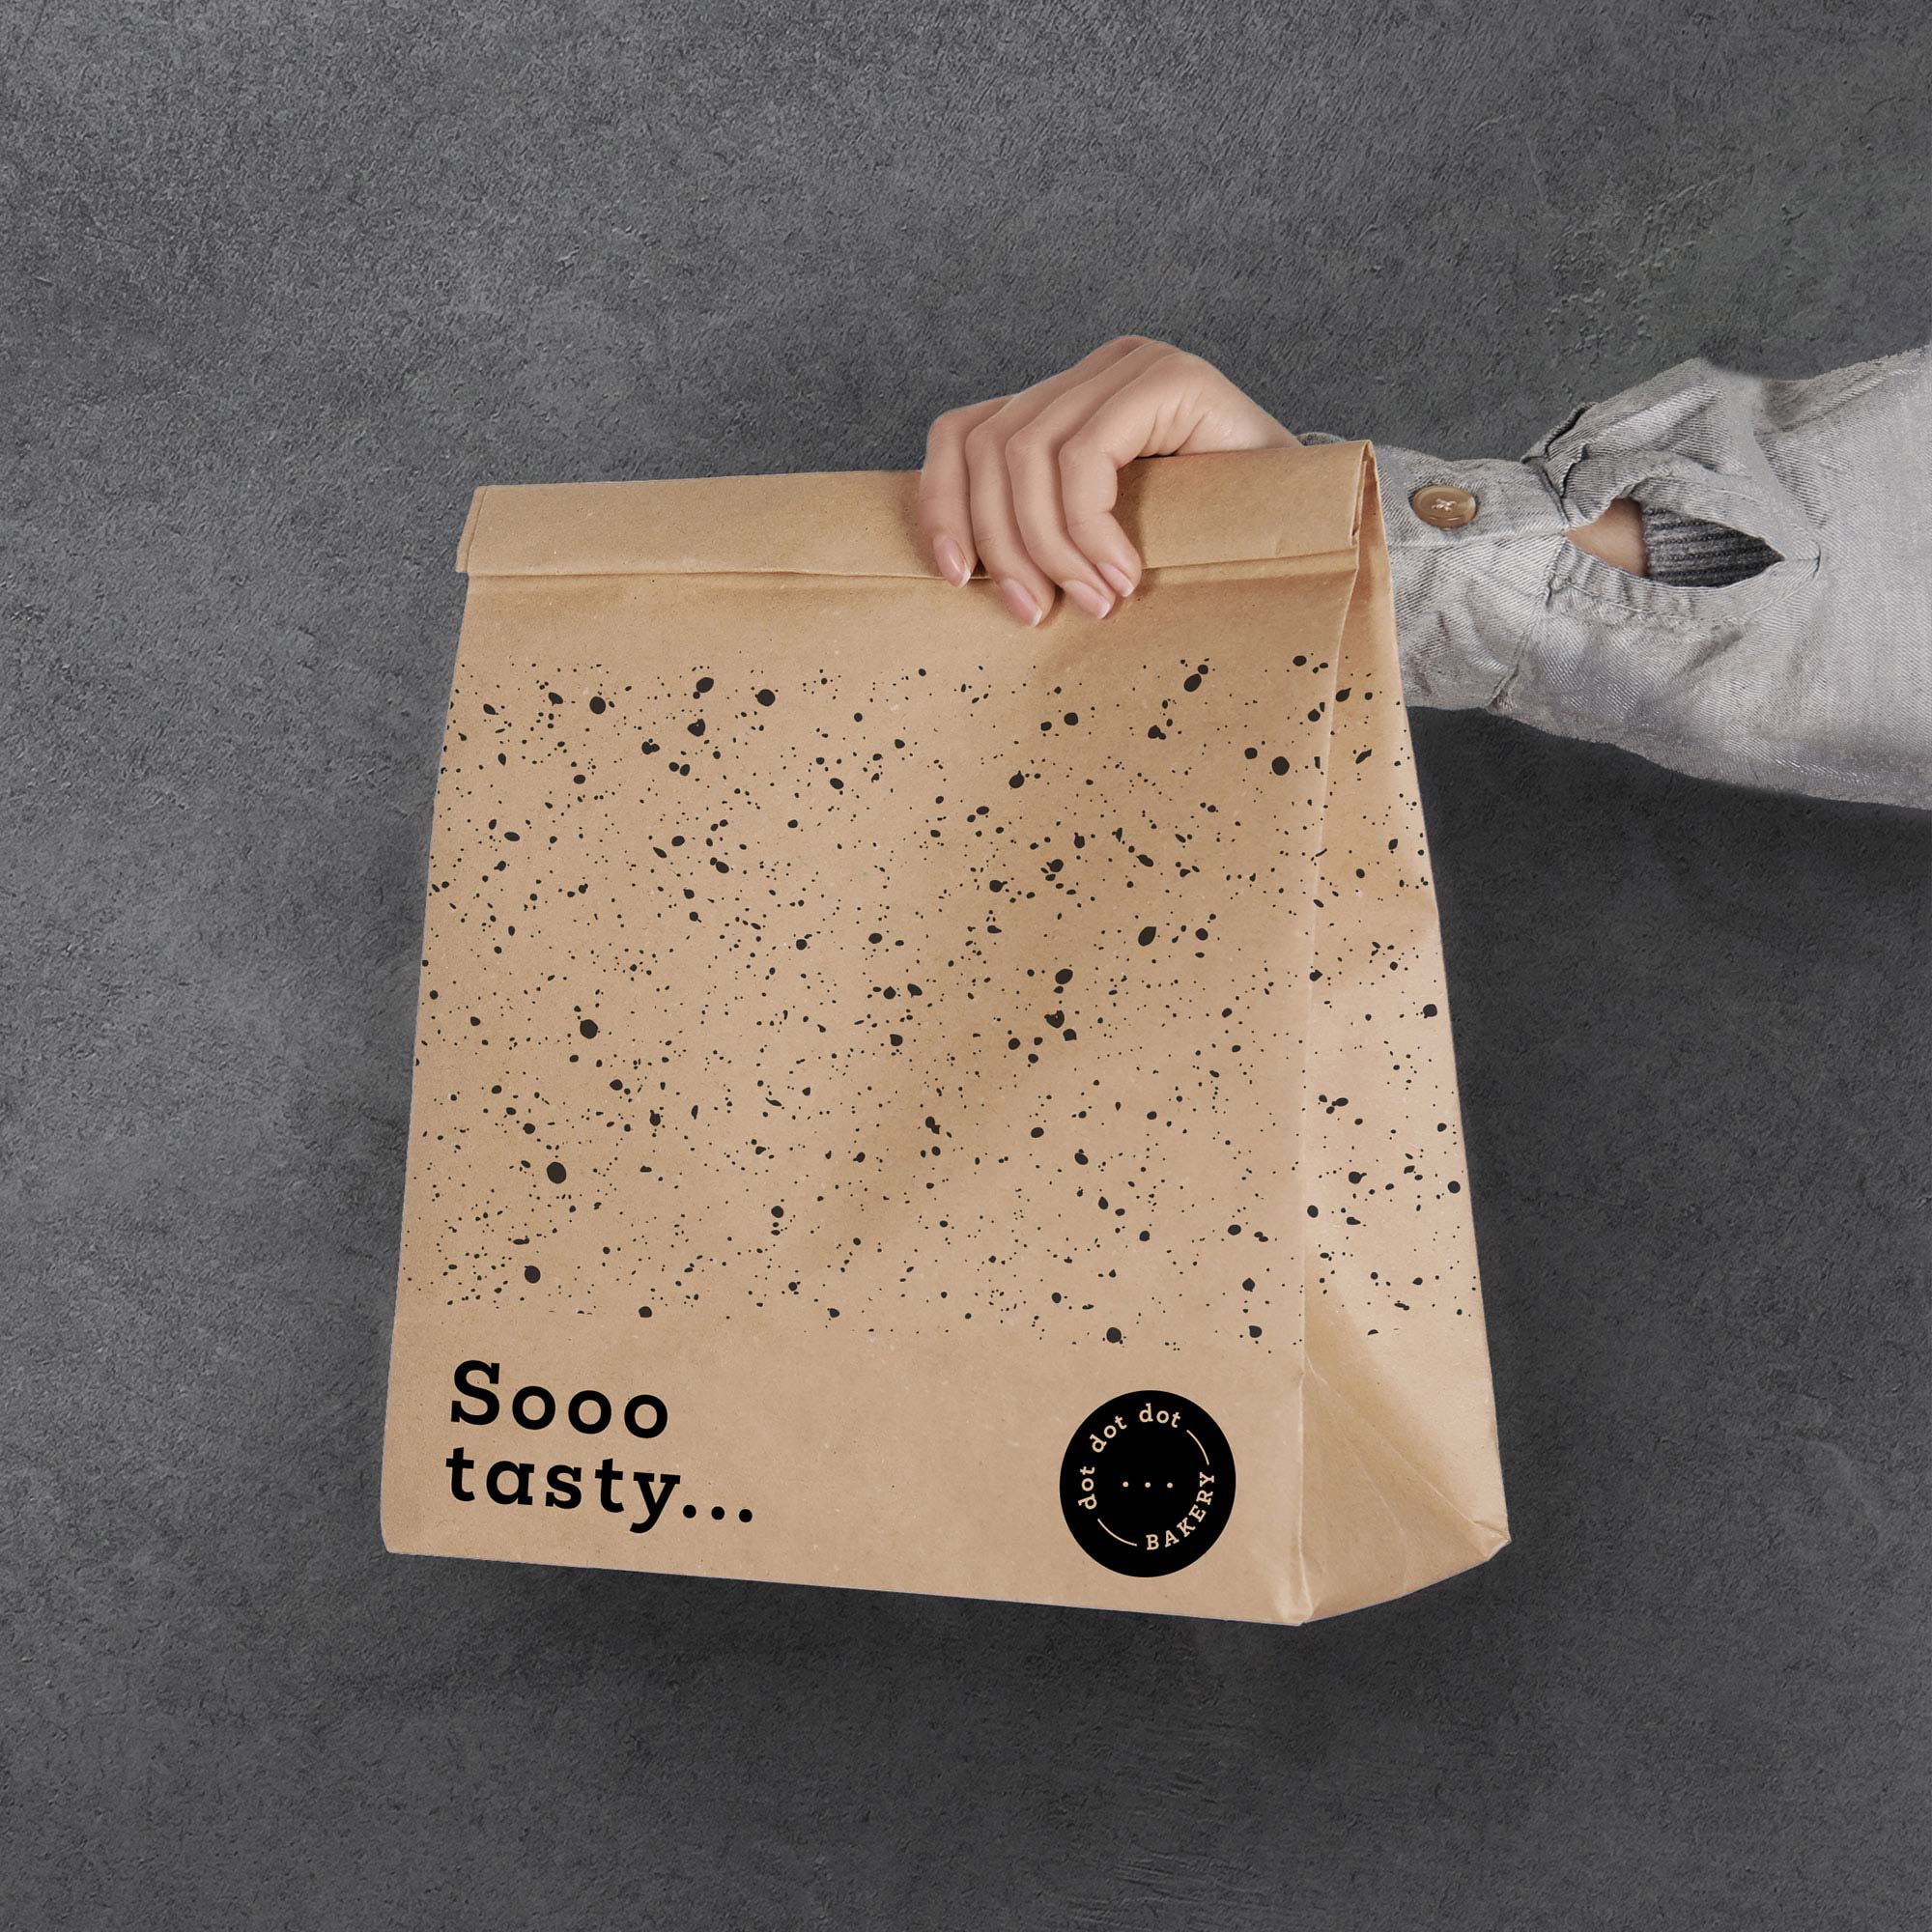 Karolina Król Studio illustrated craft paper bakery bag packaging design